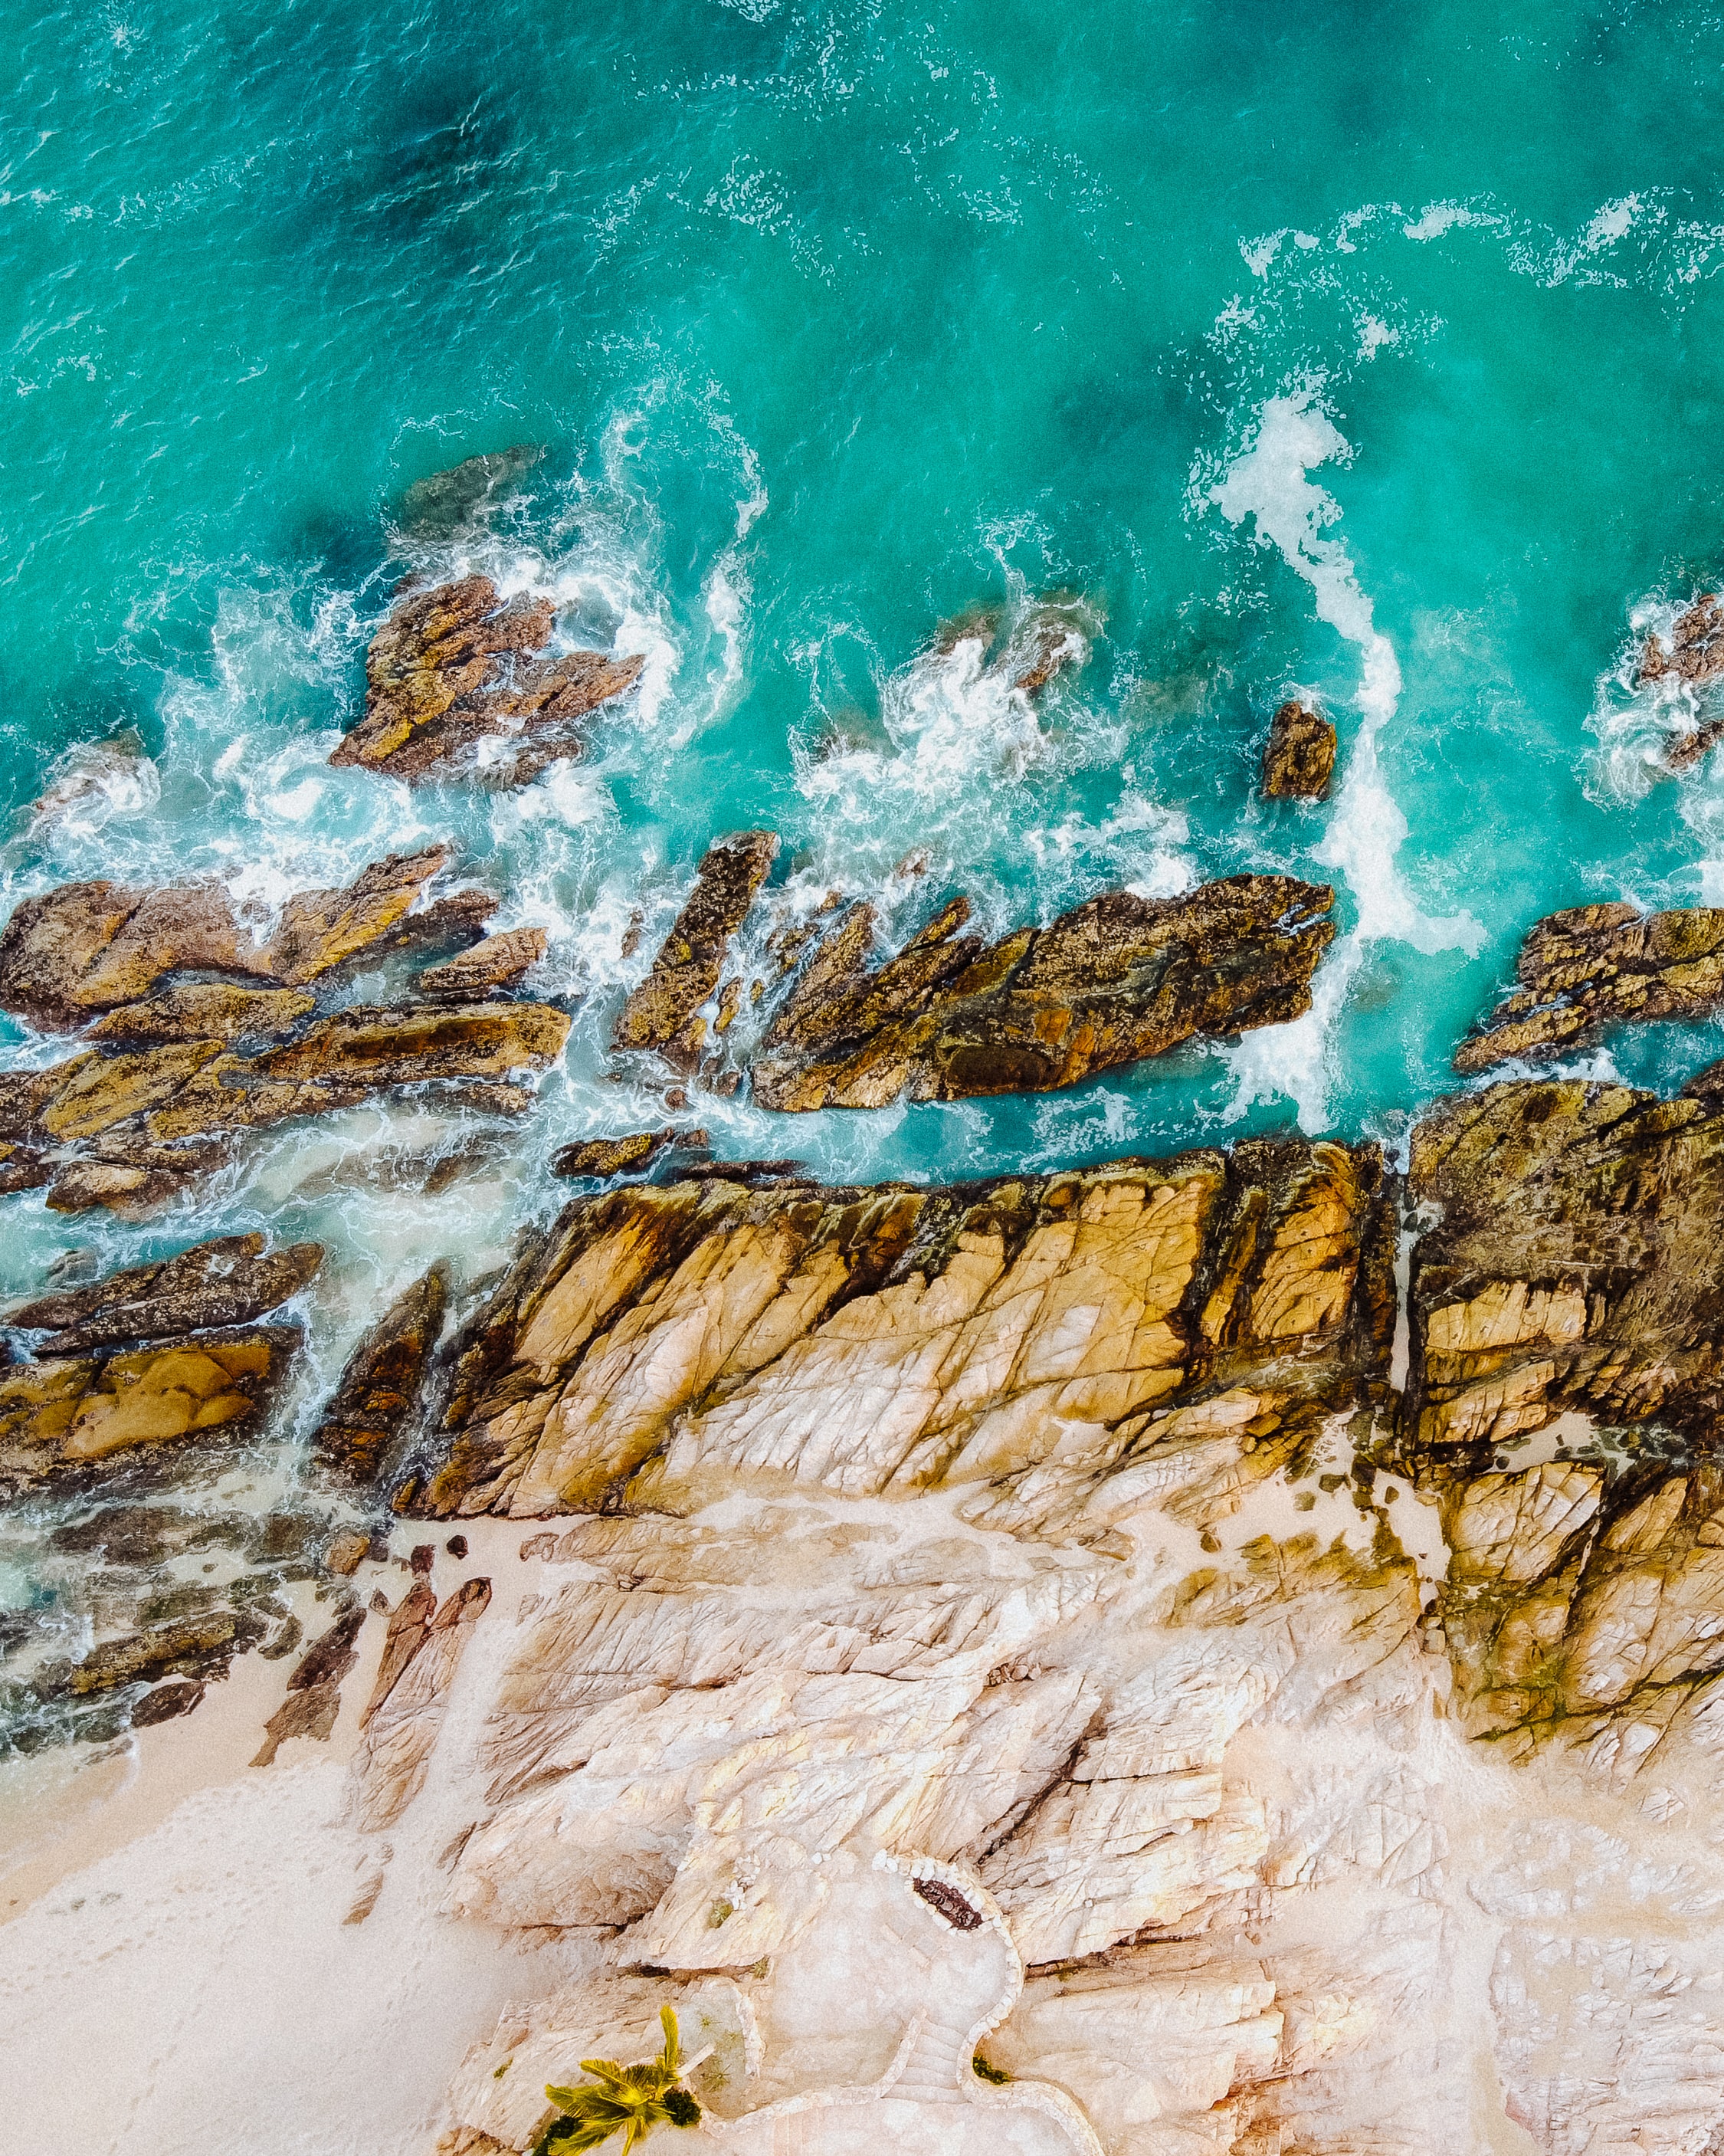 119866 descargar imagen las rocas, naturaleza, agua, mar, ondas, rocas, vista desde arriba: fondos de pantalla y protectores de pantalla gratis